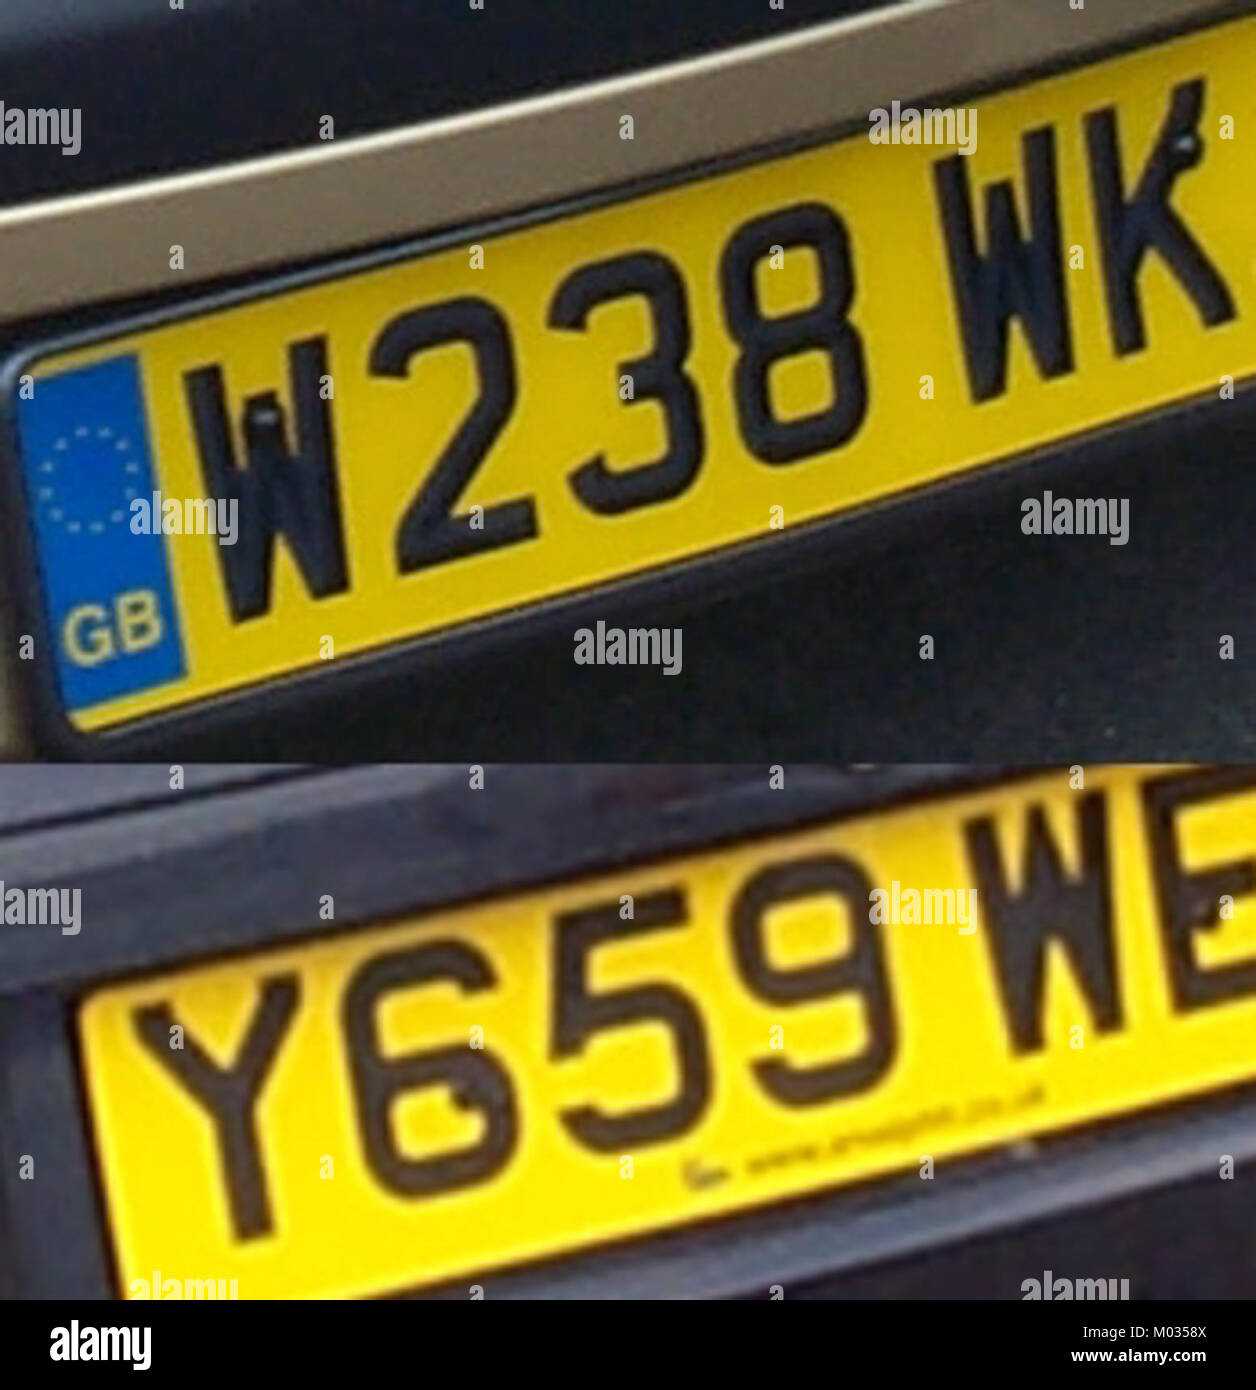 British car number plates Stock Photo - Alamy